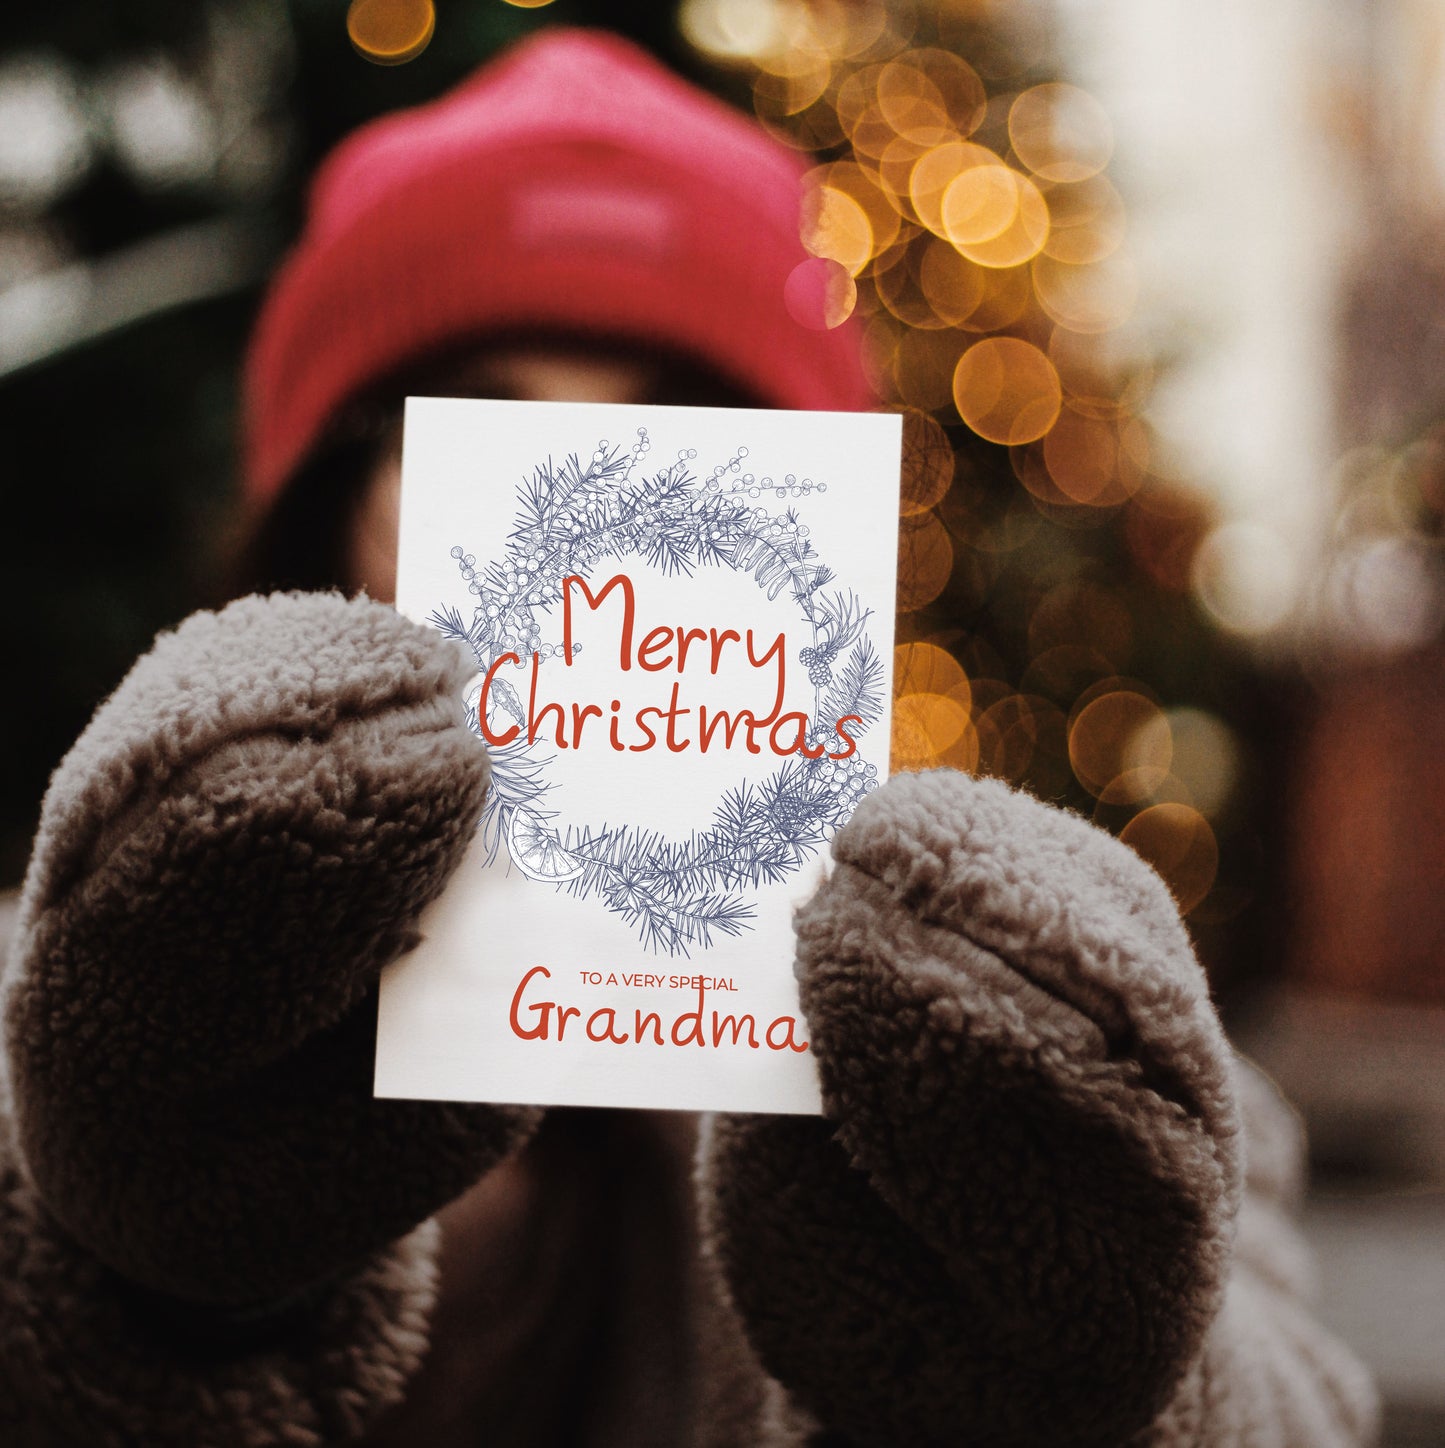 Grandma Christmas Wishing Card